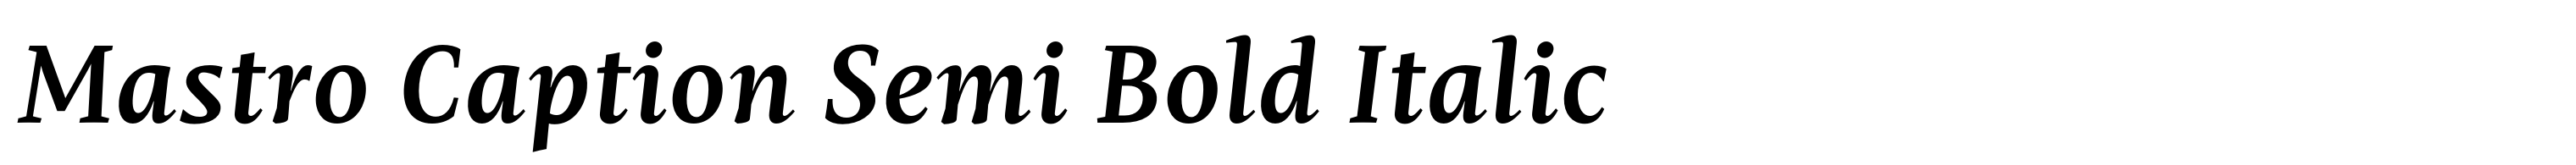 Mastro Caption Semi Bold Italic